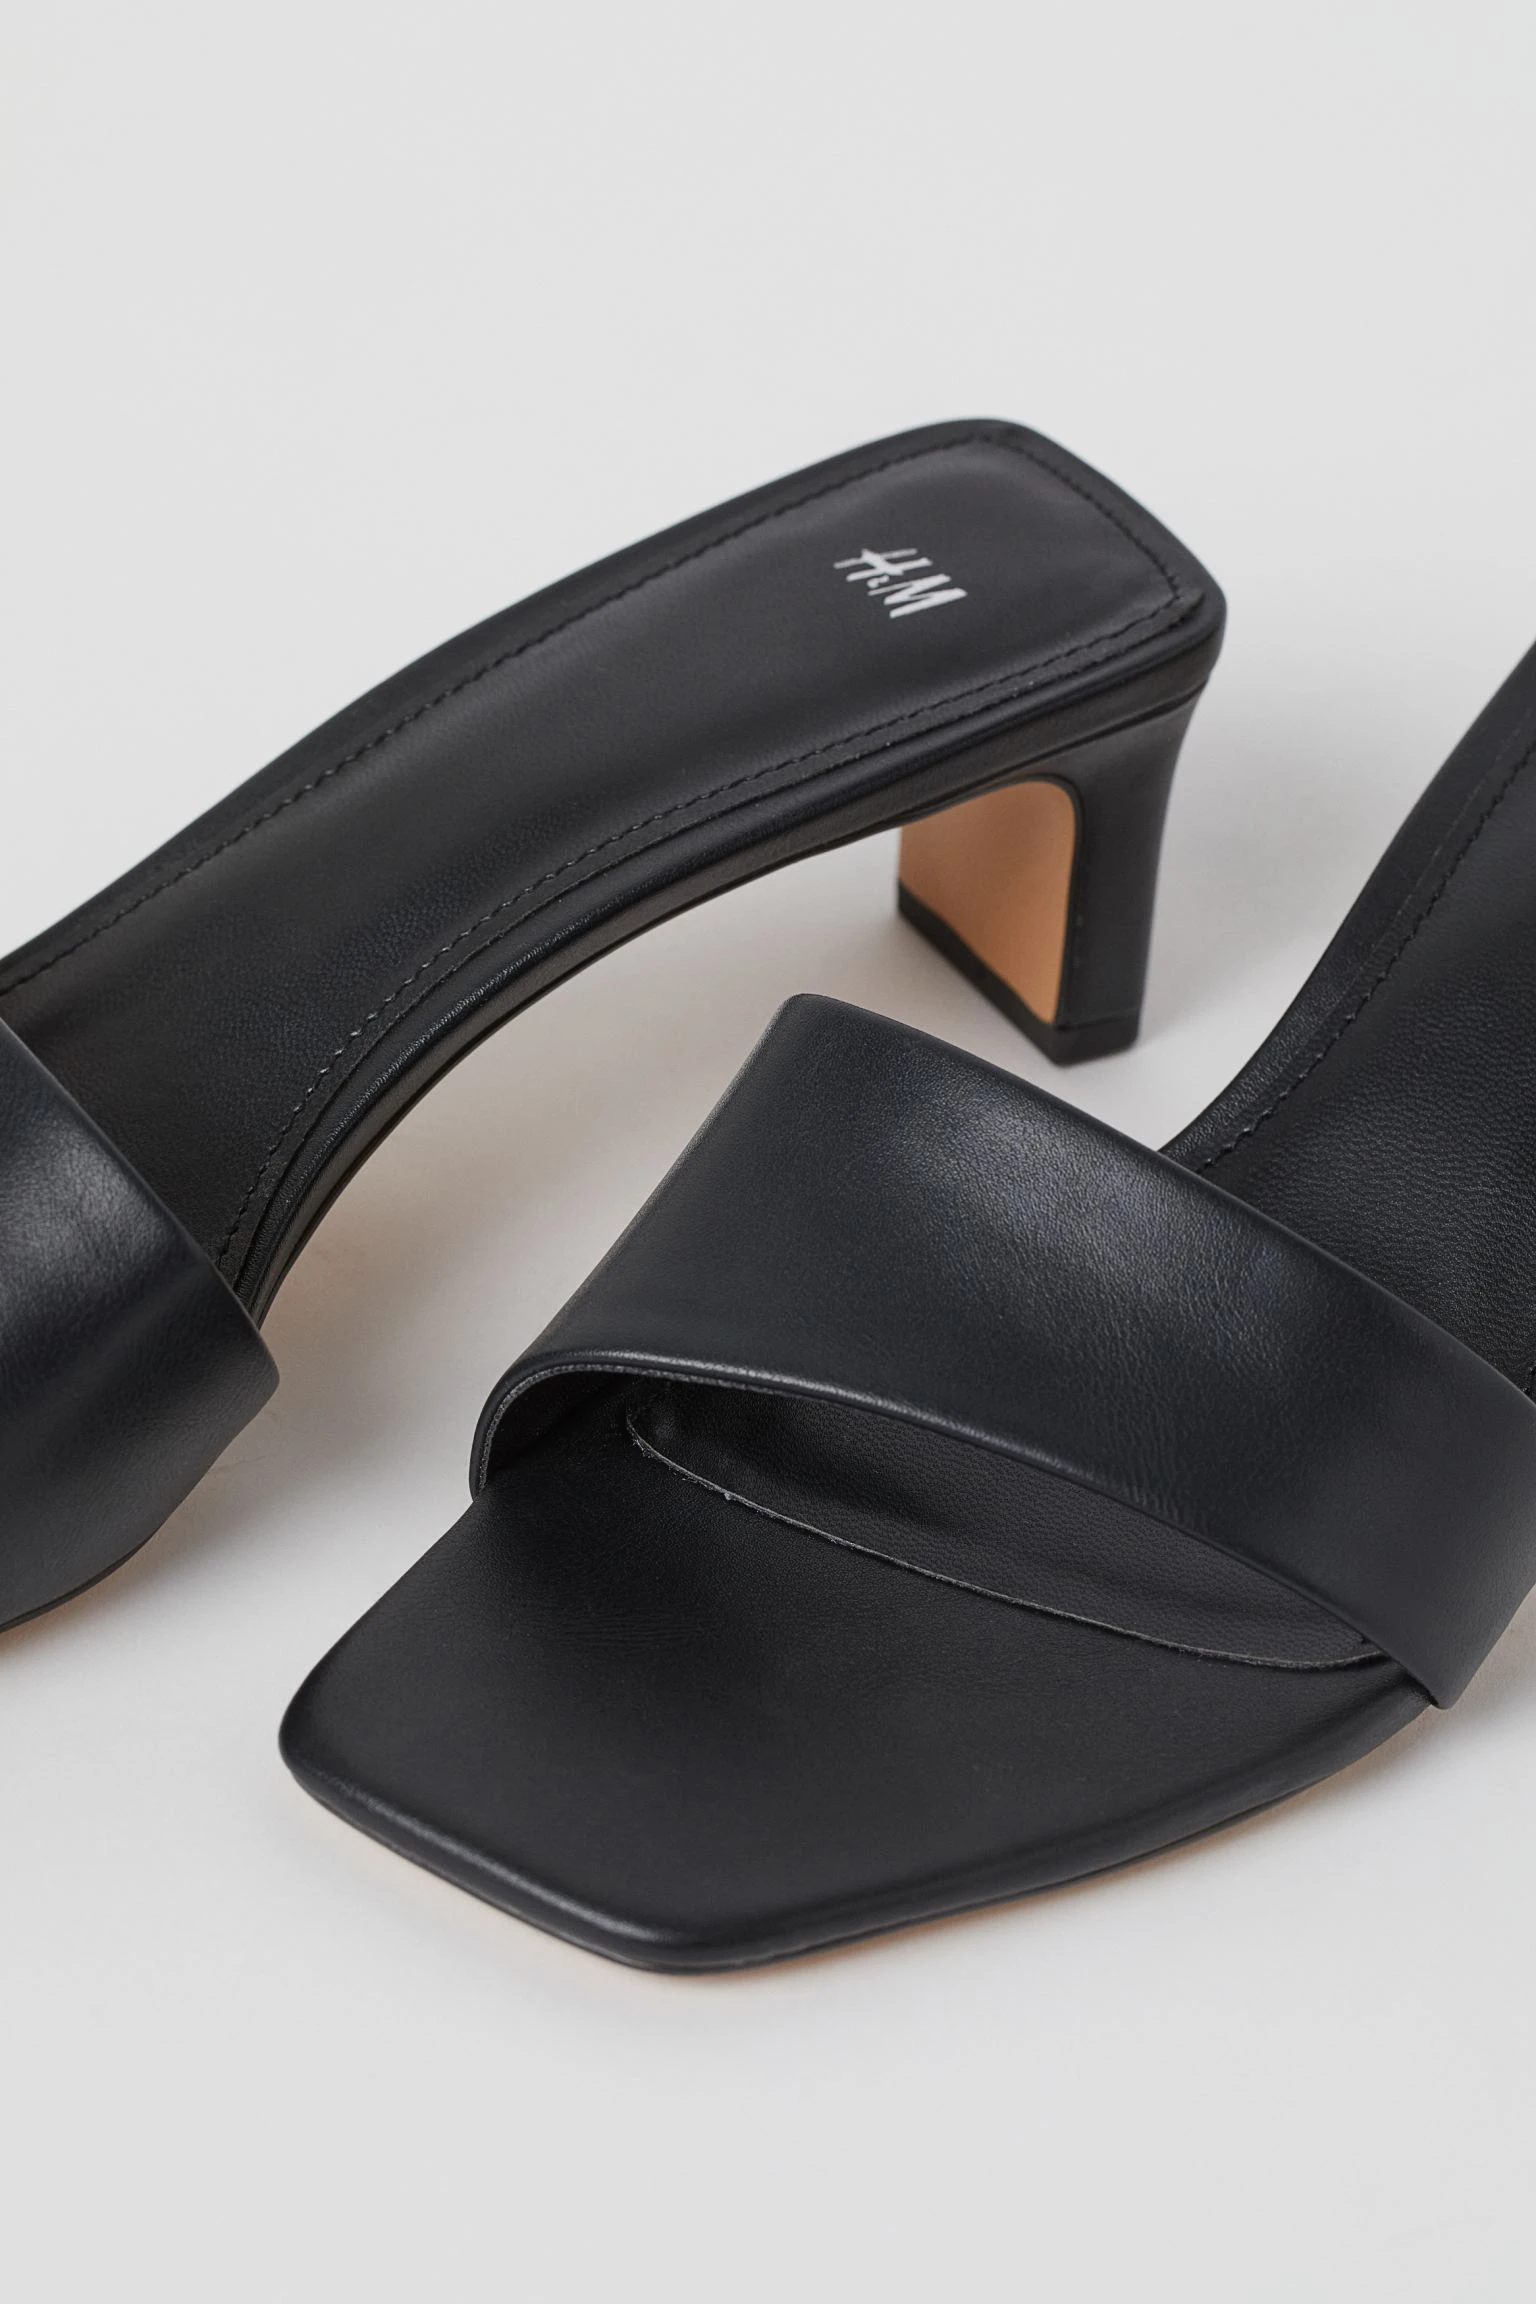 pick Digital Squire Sandale dama elegante | Sandale piele HM toc mic | 70 lei - Gabriela  Boutique